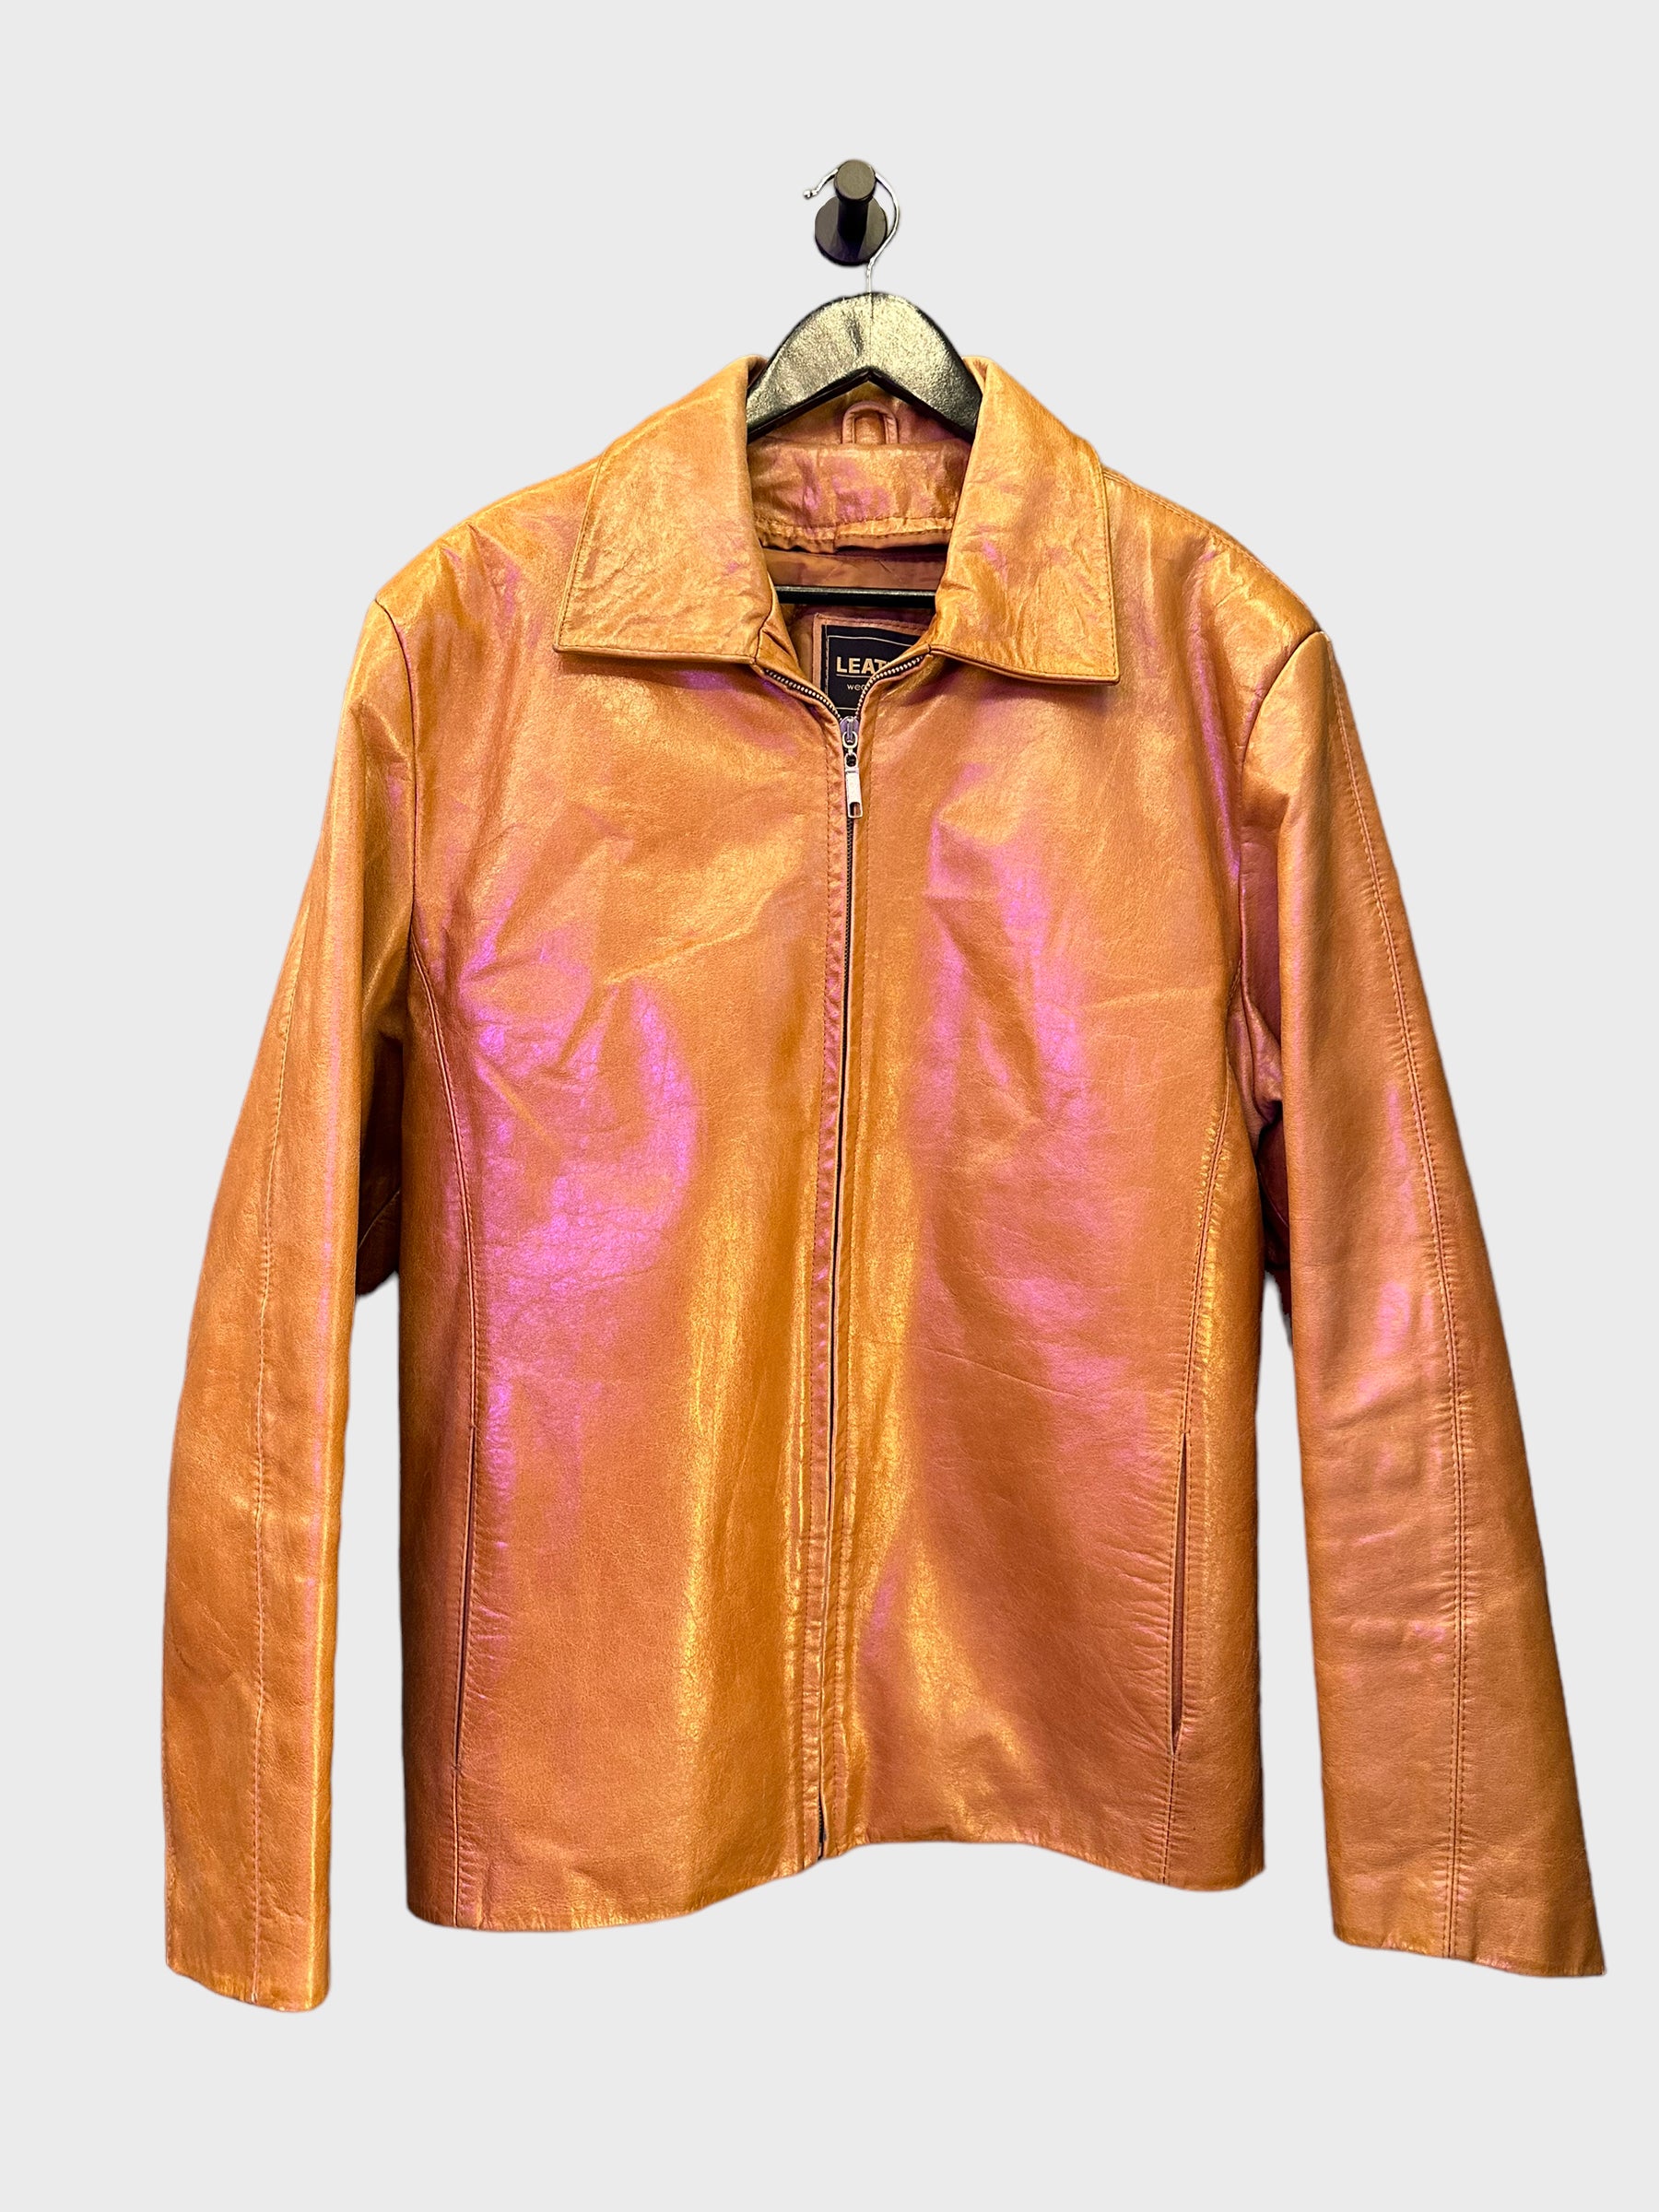 Leather jacket golden brown